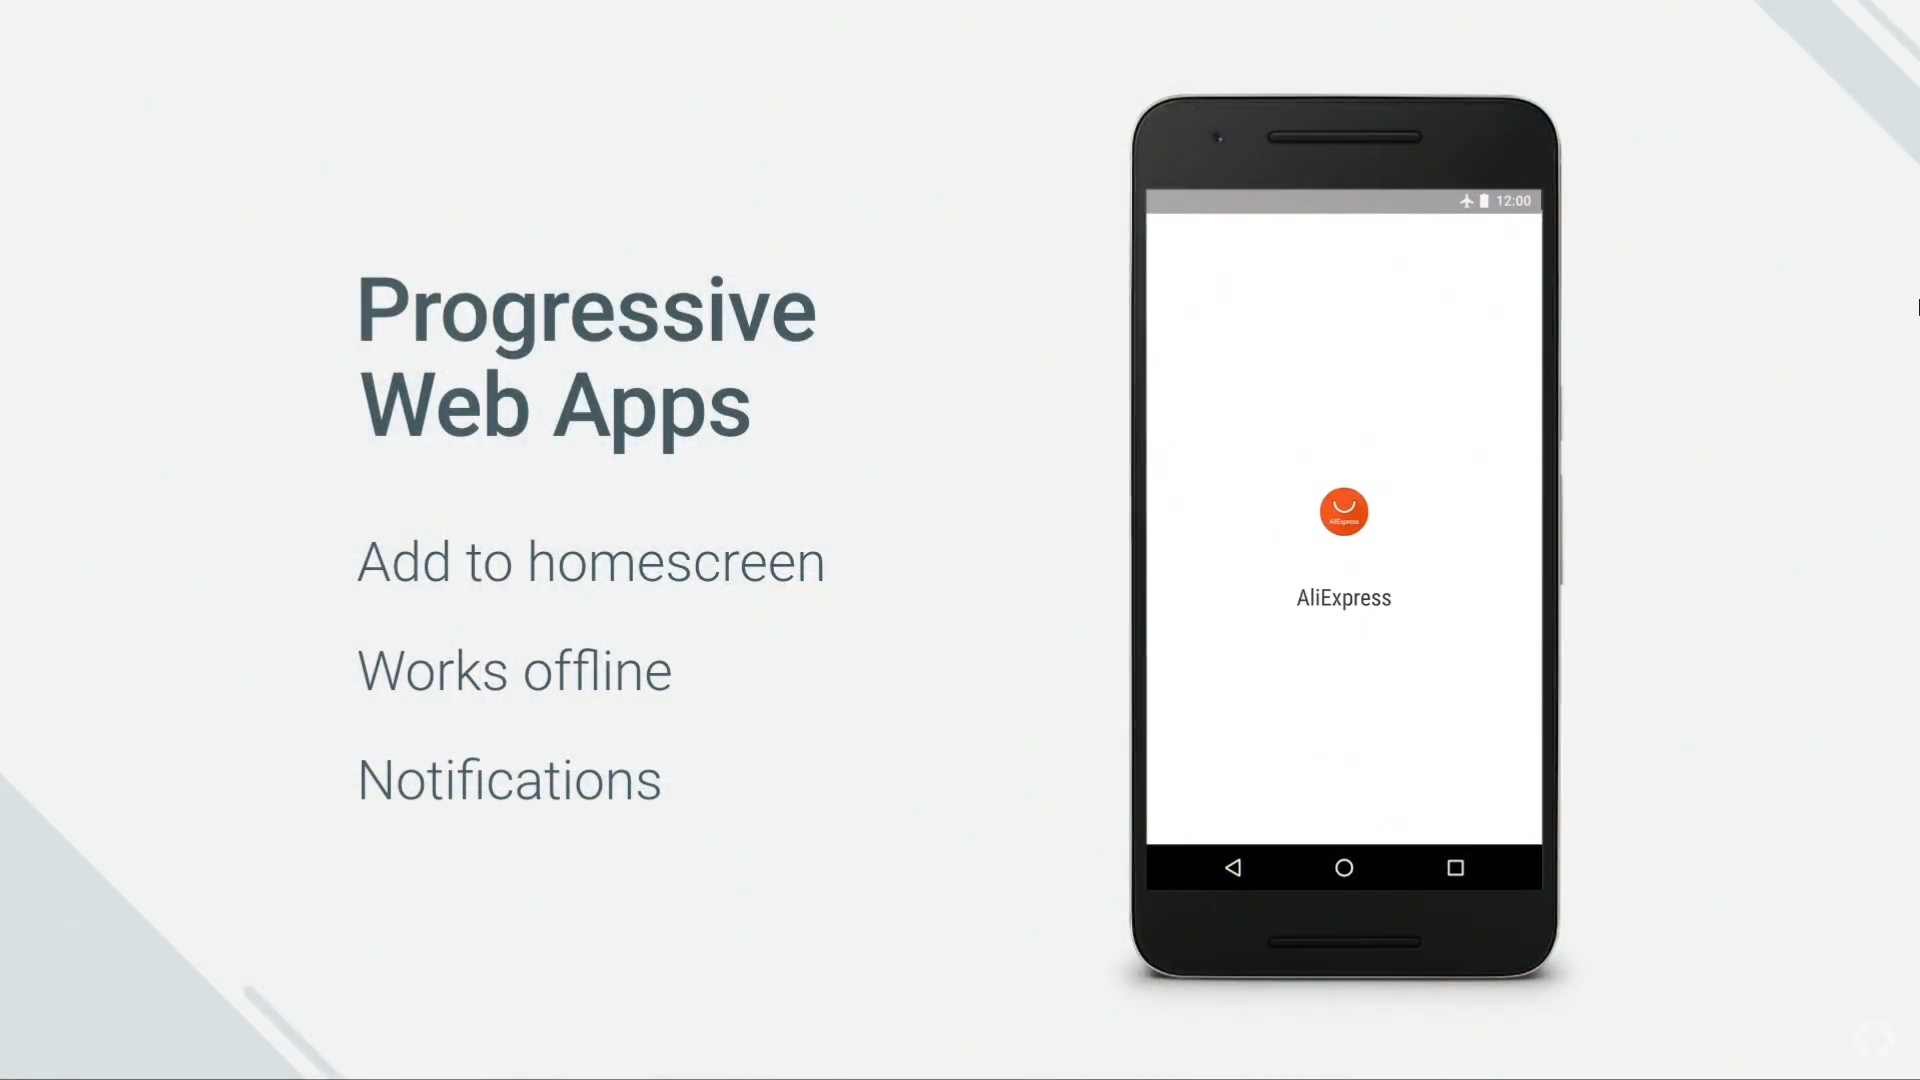 A Progressive Web Apps slide at Google I/O 2016.